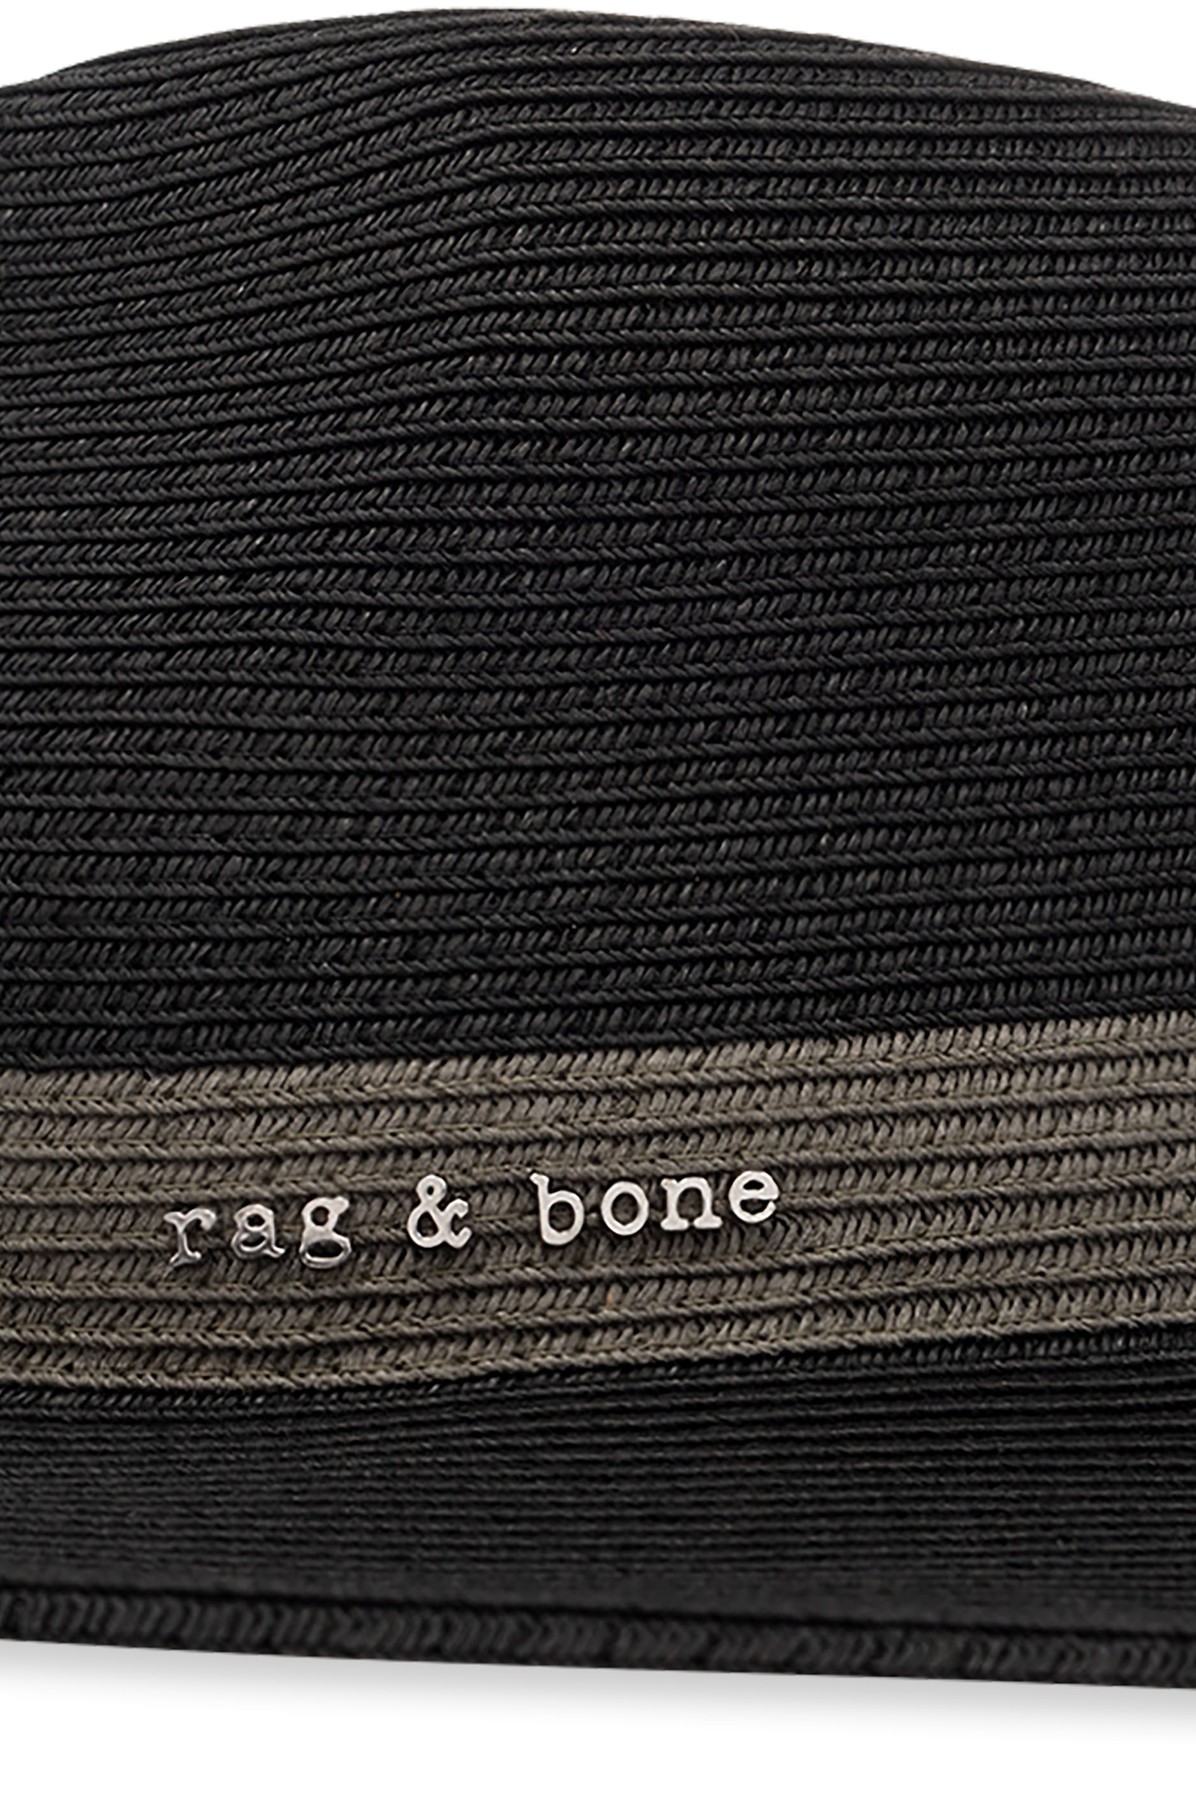 Rag & Bone ‘City' hat